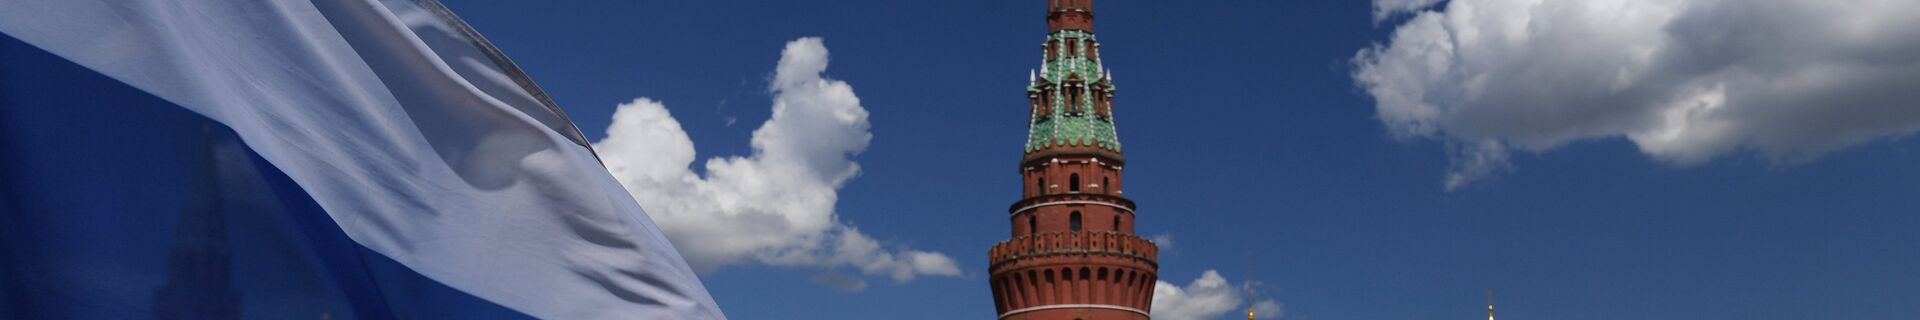 Le Kremlin de Moscou et le drapeau russe - Sputnik Молдова